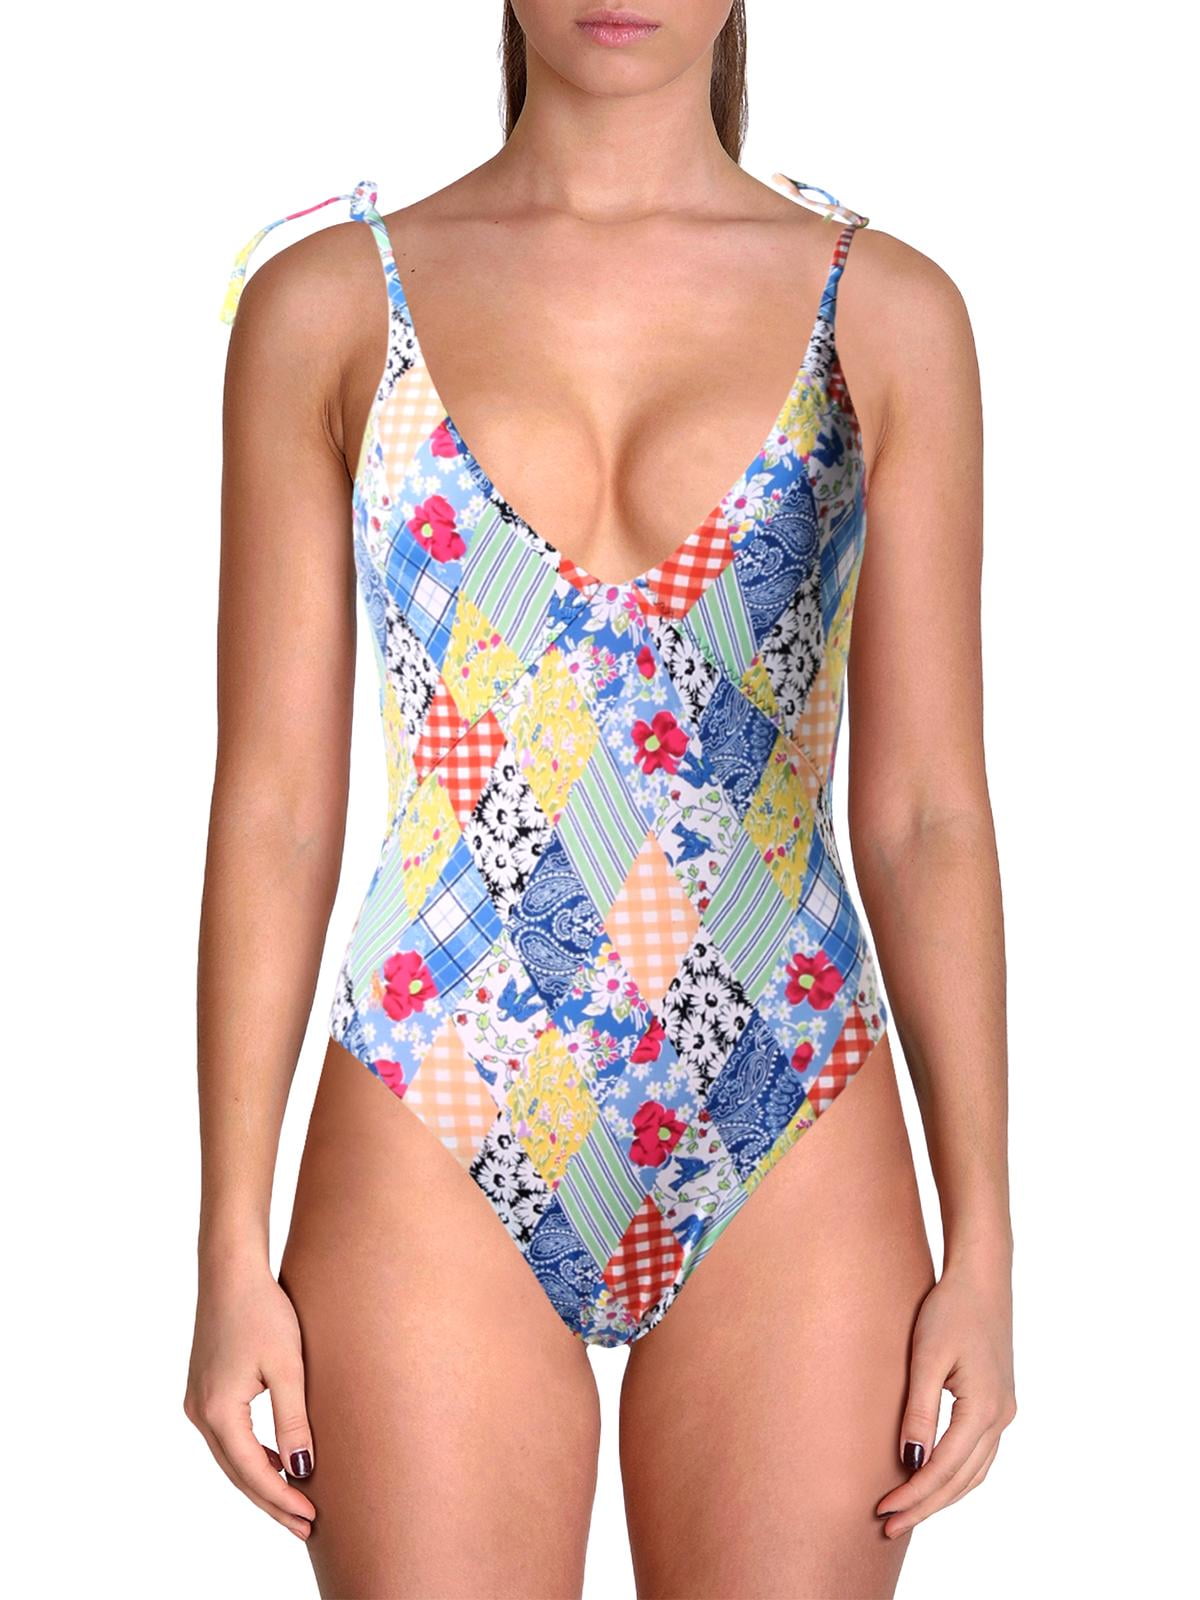 polo ralph lauren one piece swimsuit